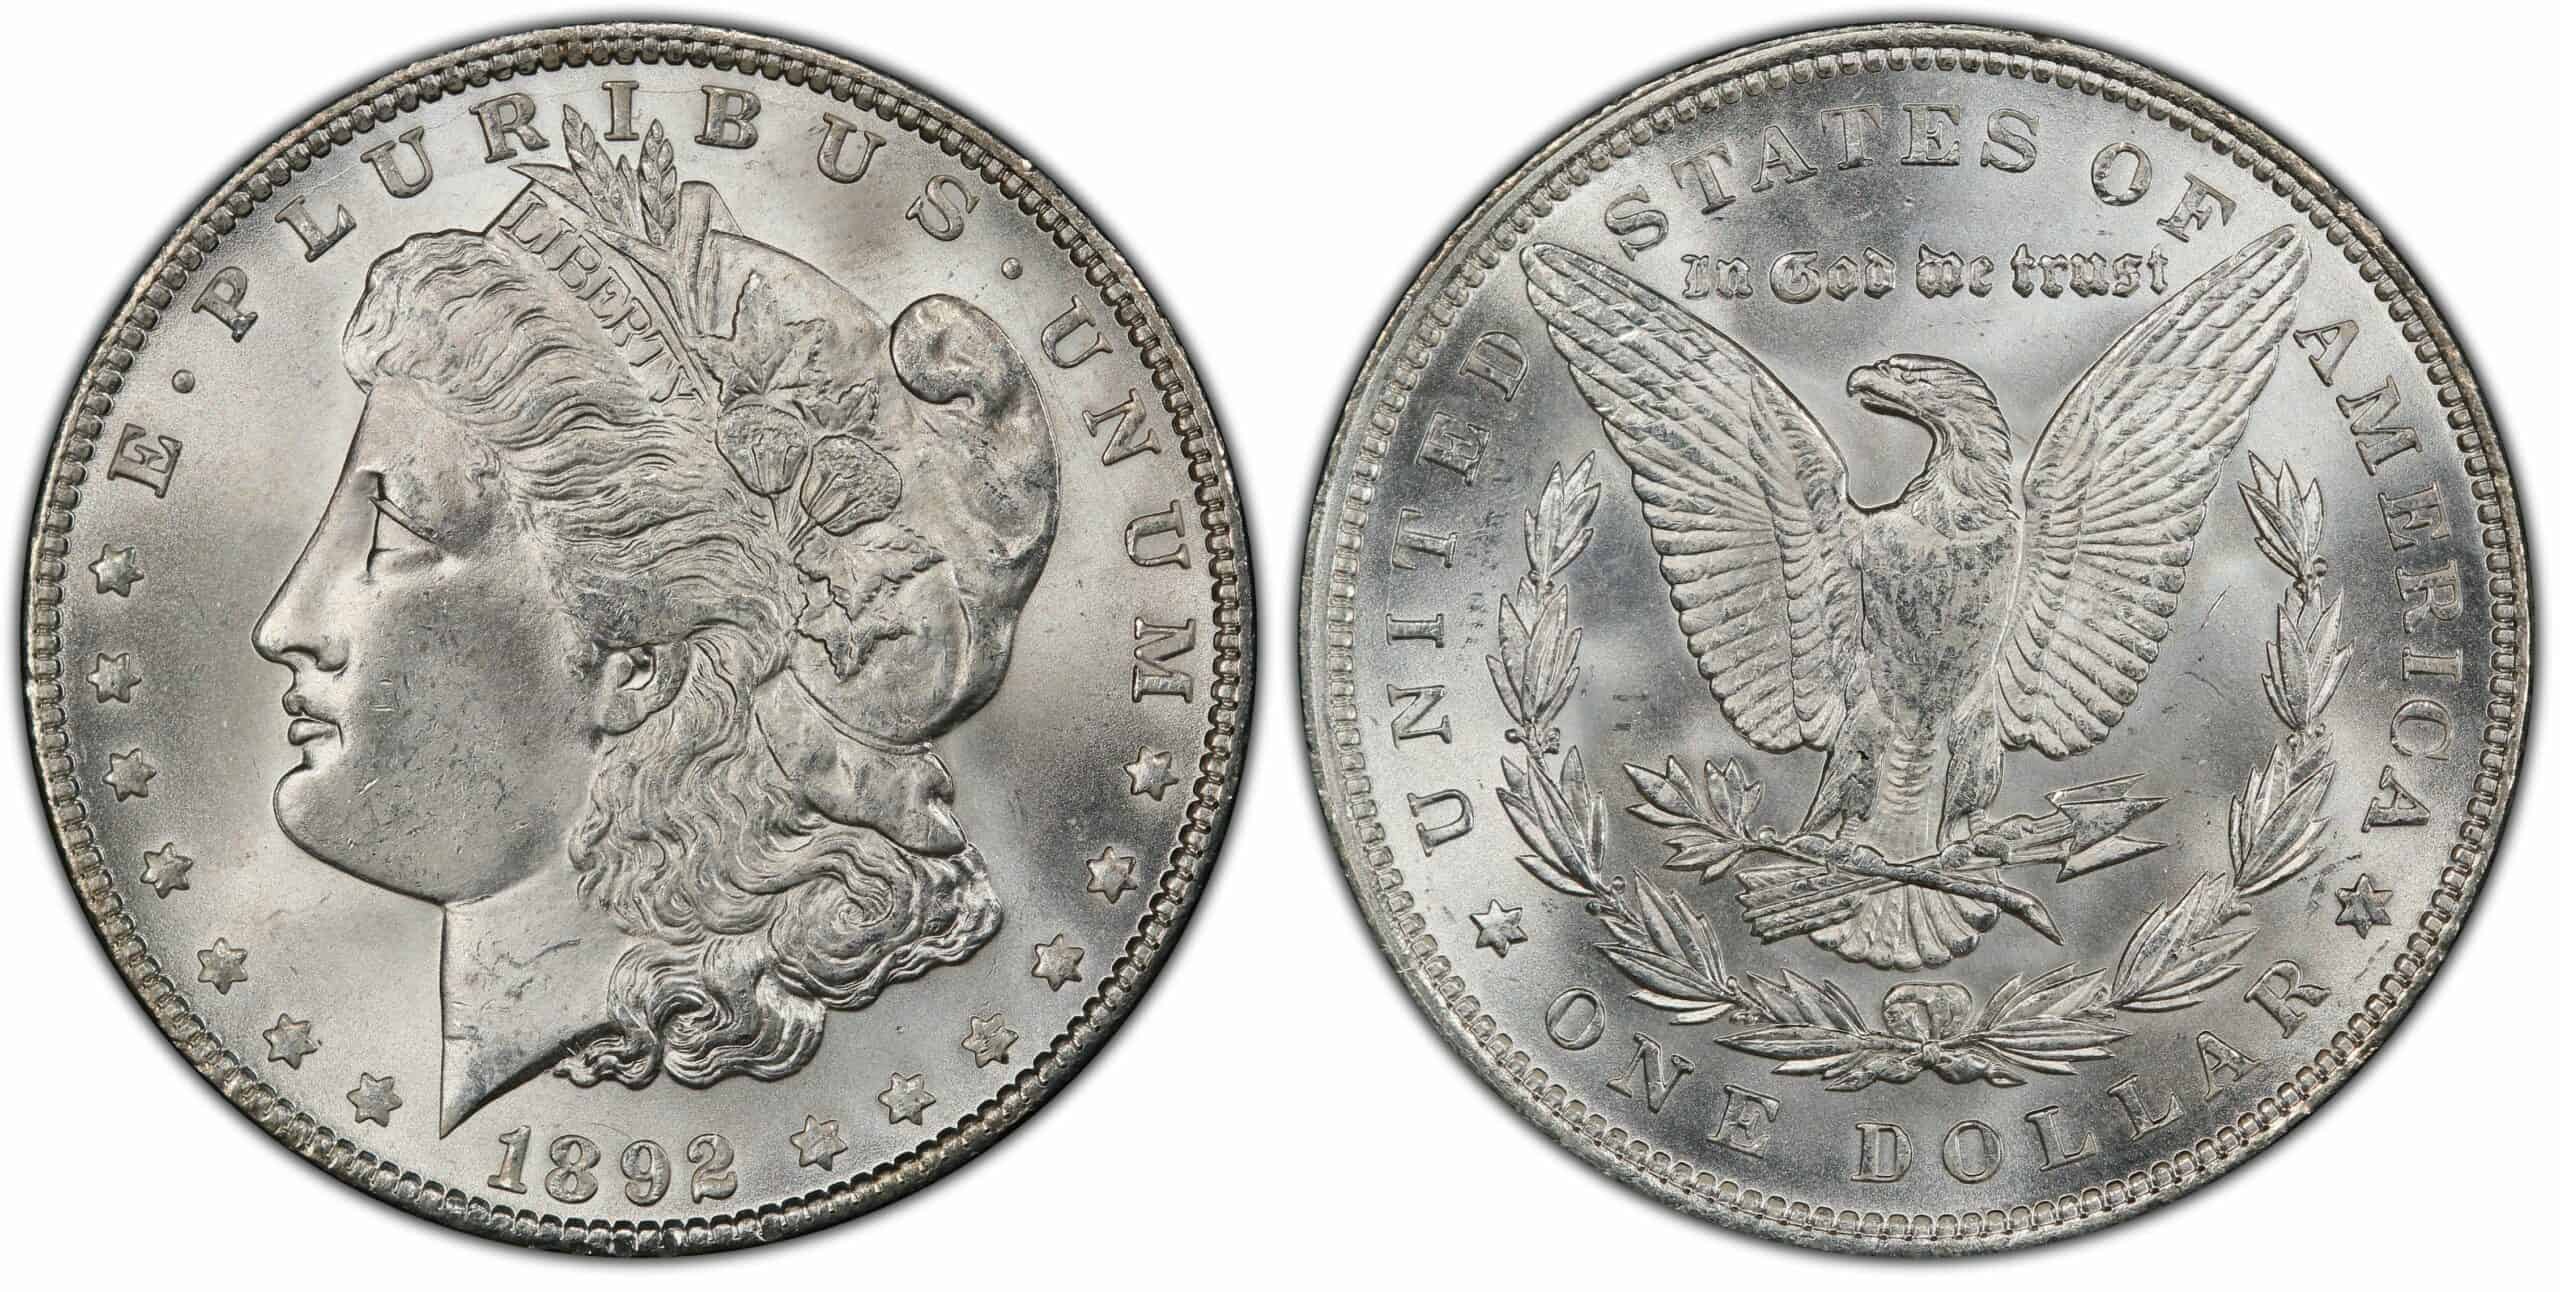 1892 No-Mint mark Silver Dollar Value